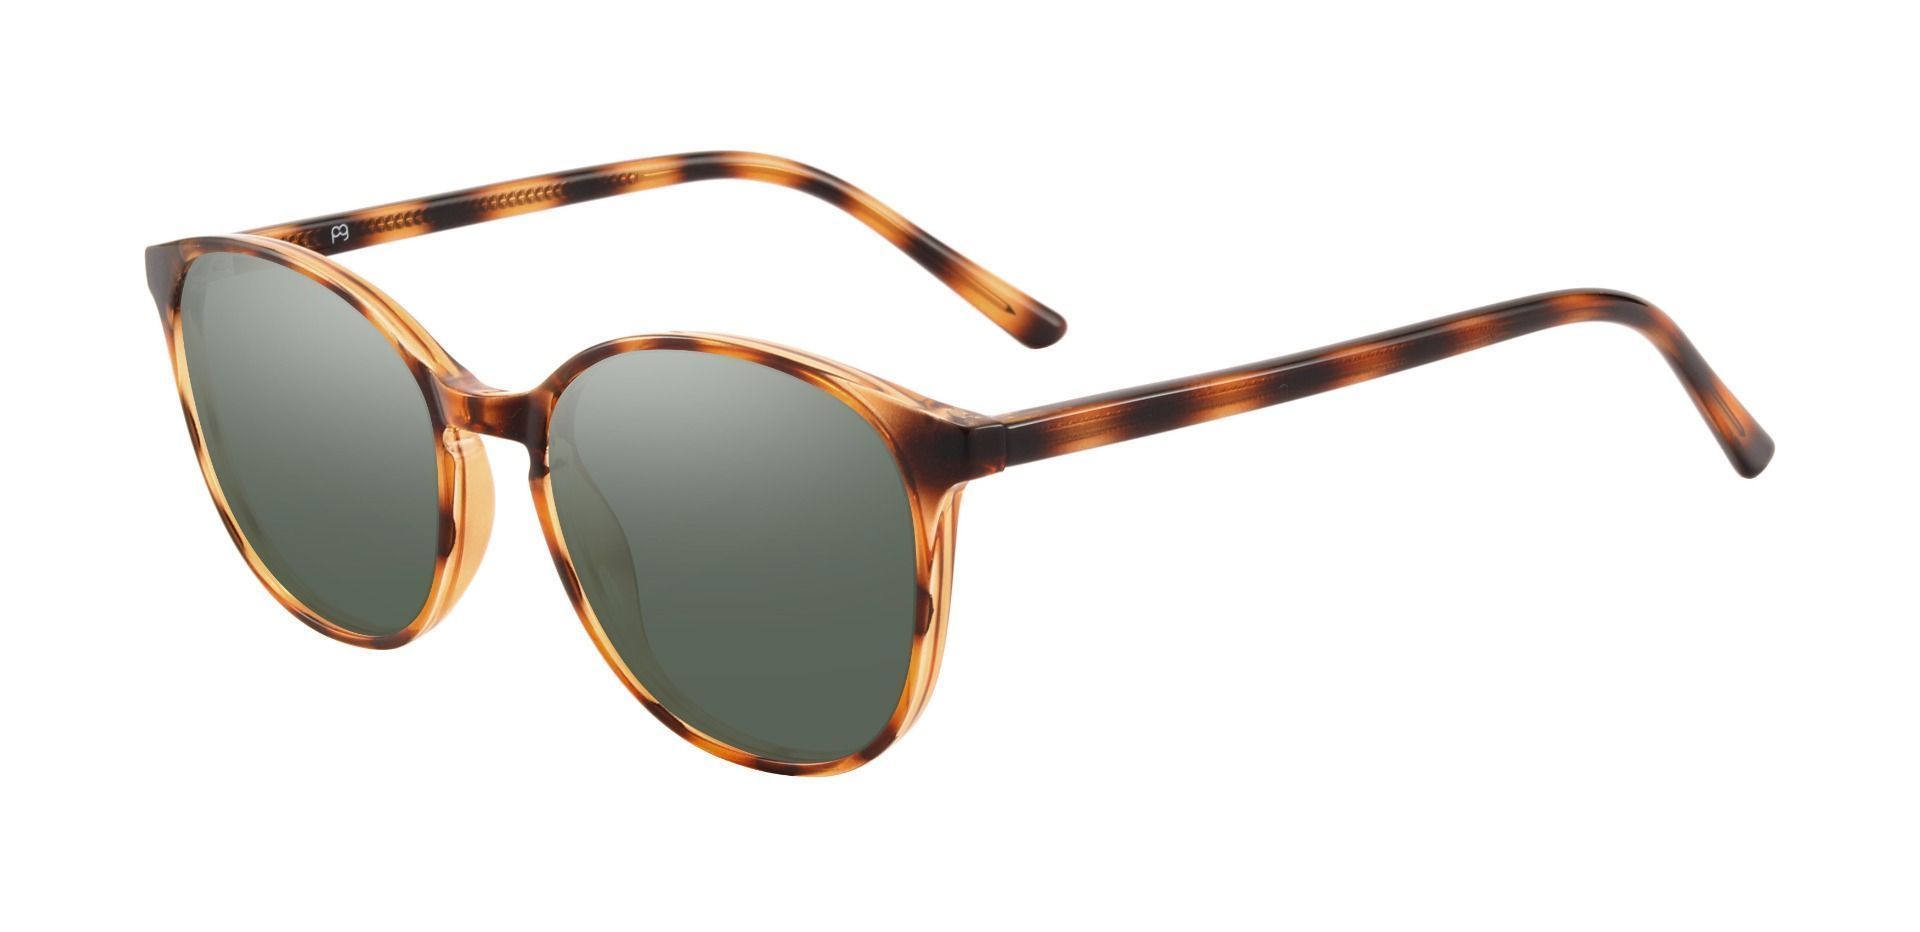 Shanley Oval Lined Bifocal Sunglasses - Tortoise Frame With Green Lenses